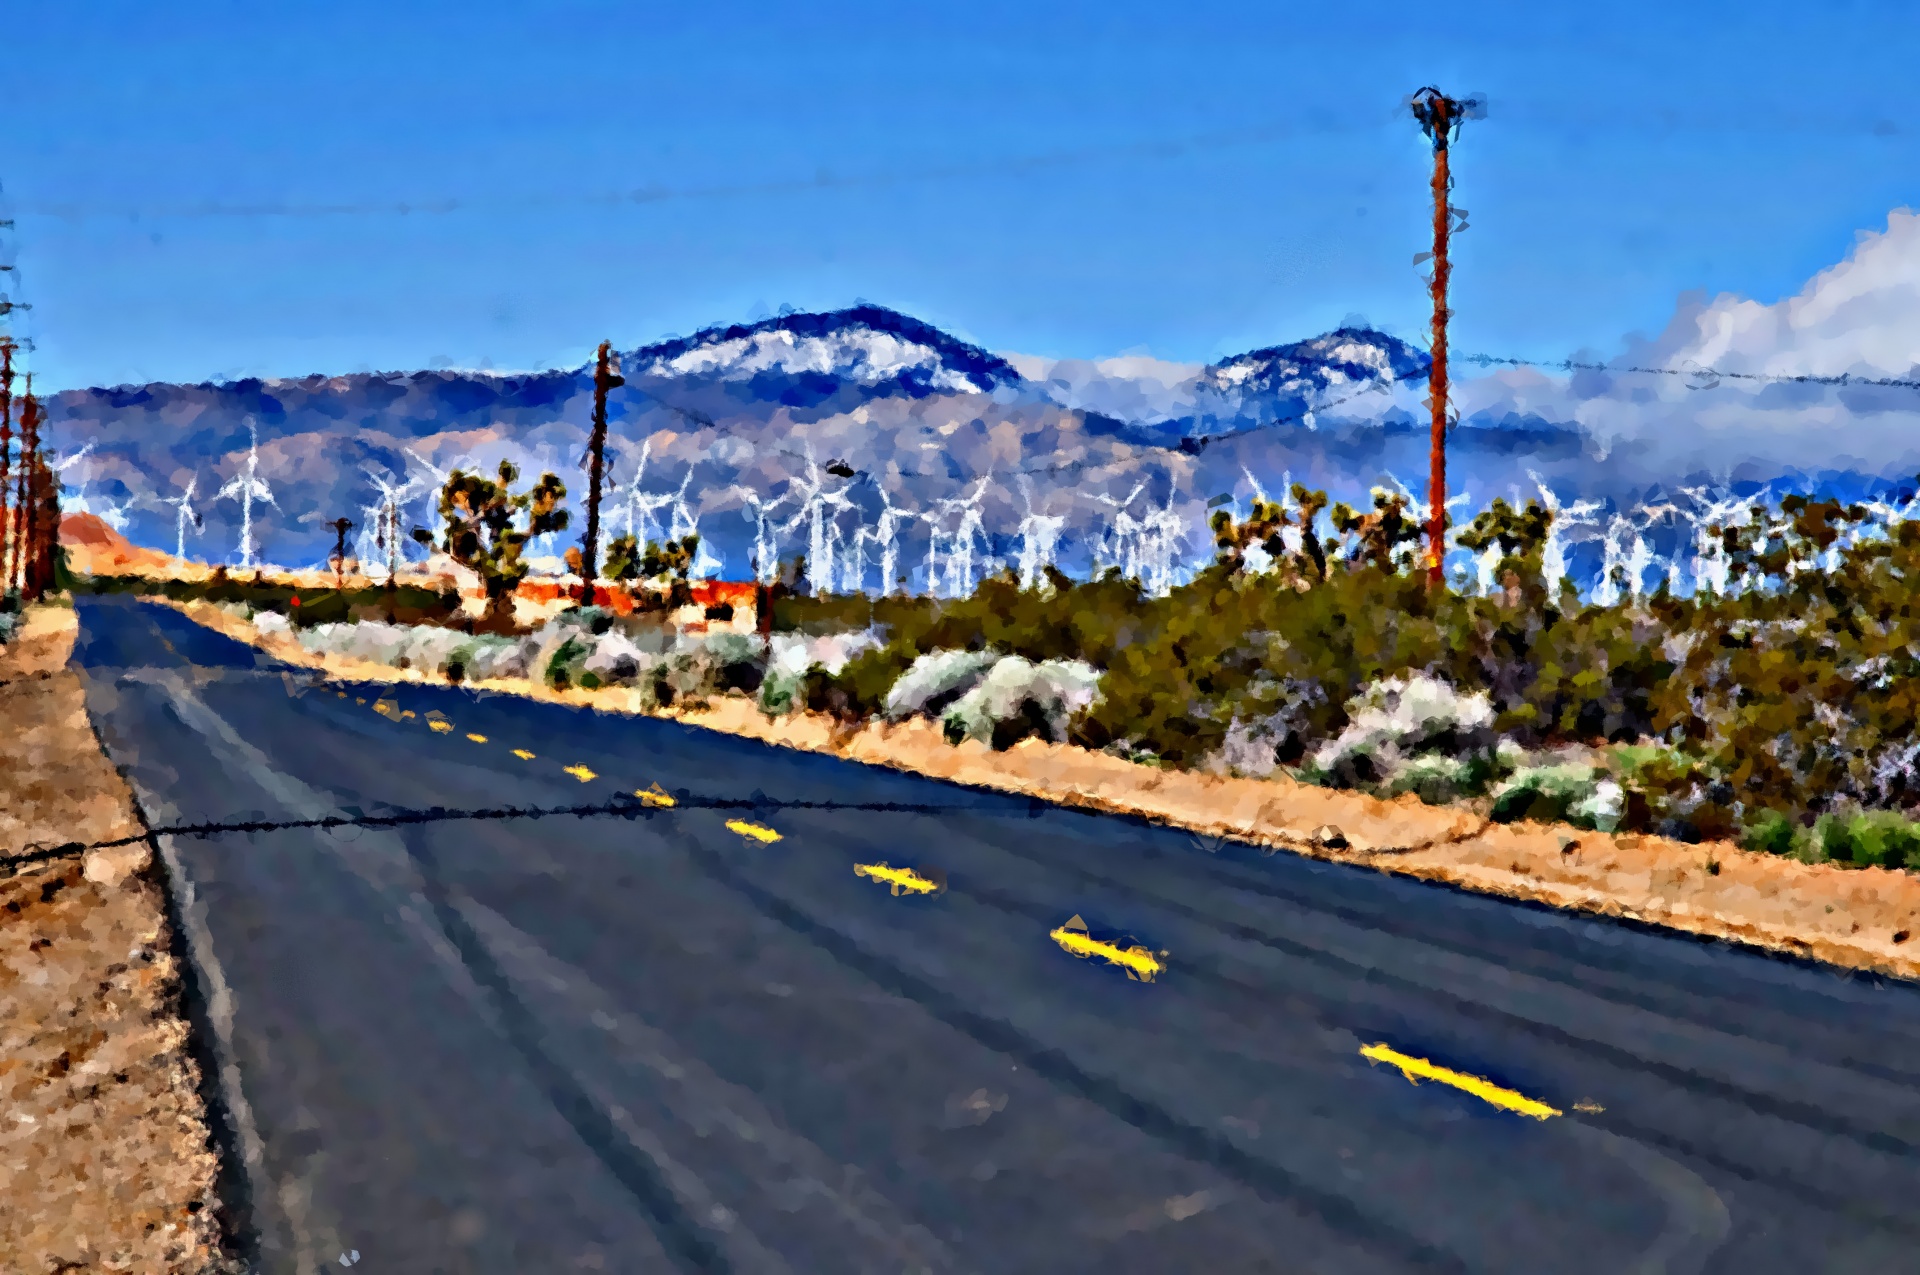 Desert Highway